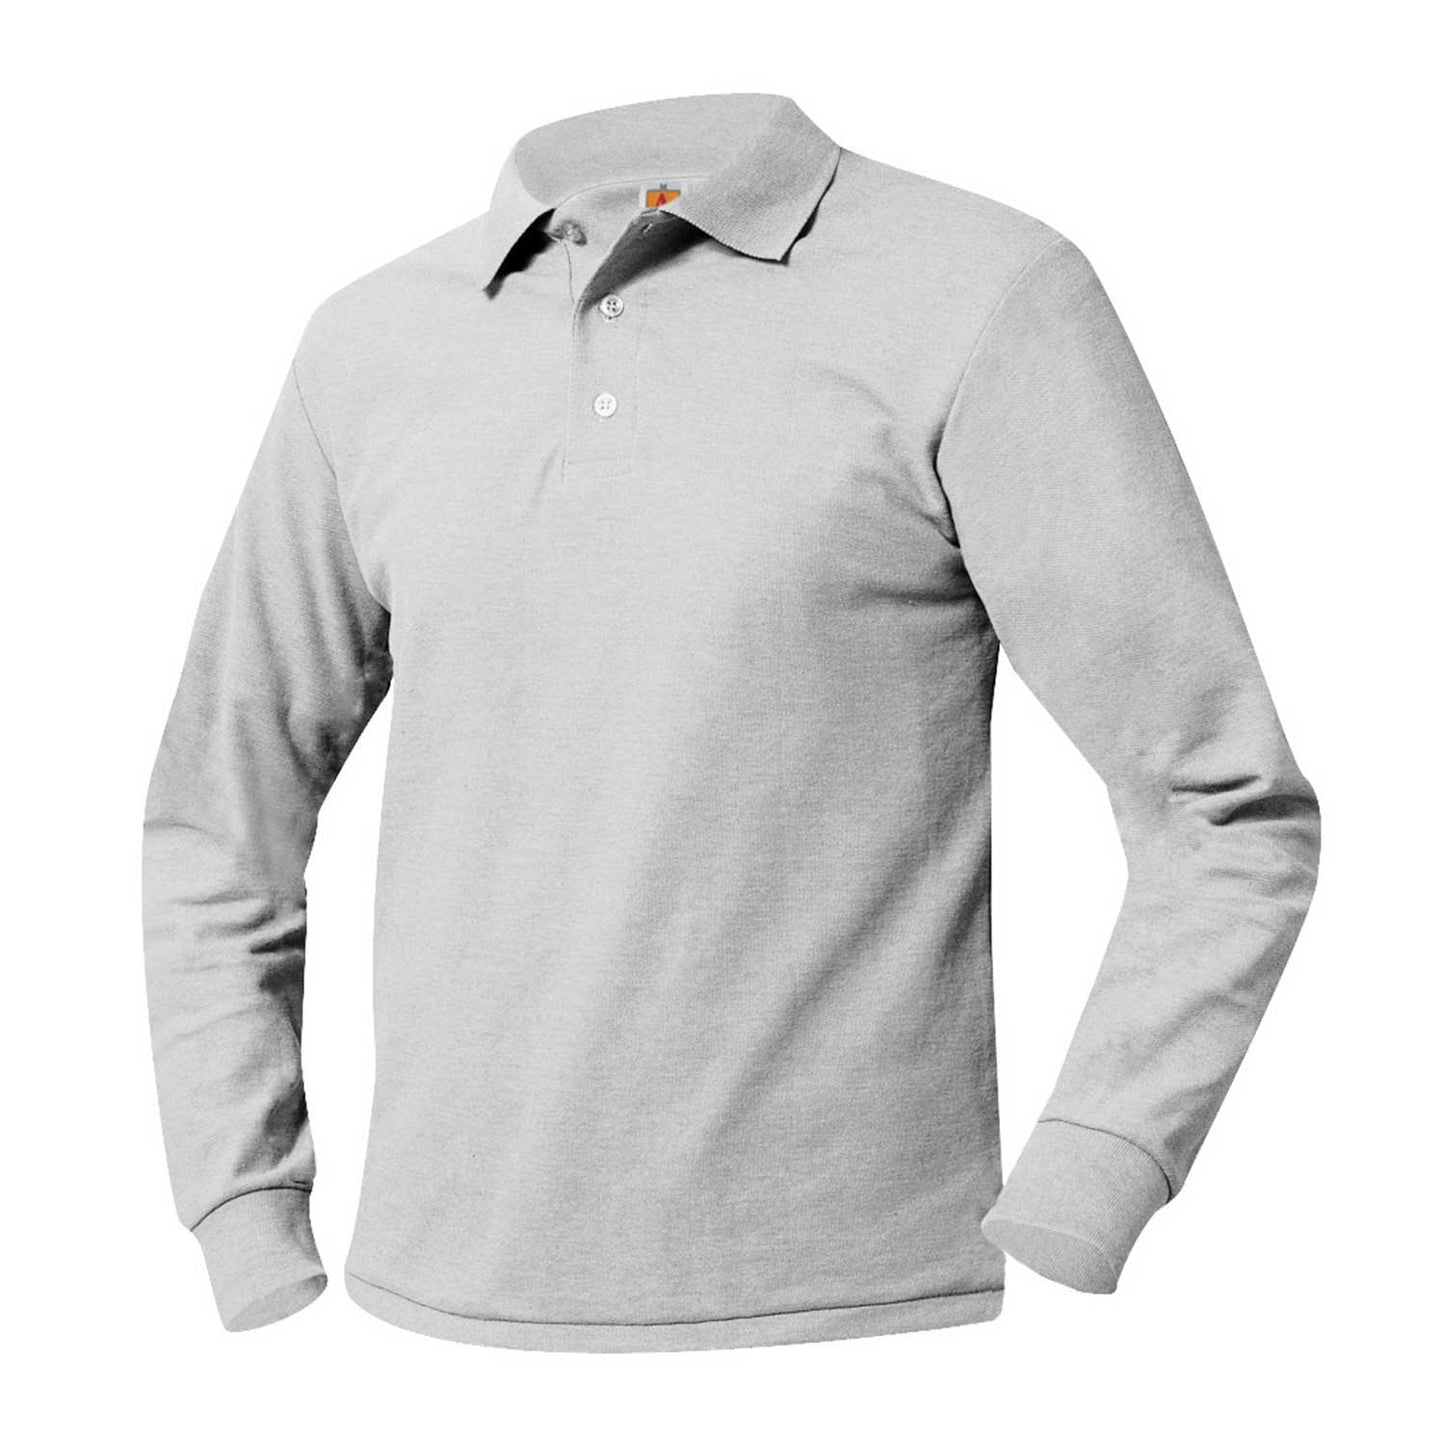 Unisex Pique Polo Shirt, Long Sleeves, Ribbed Cuffs w/Logo - 1106